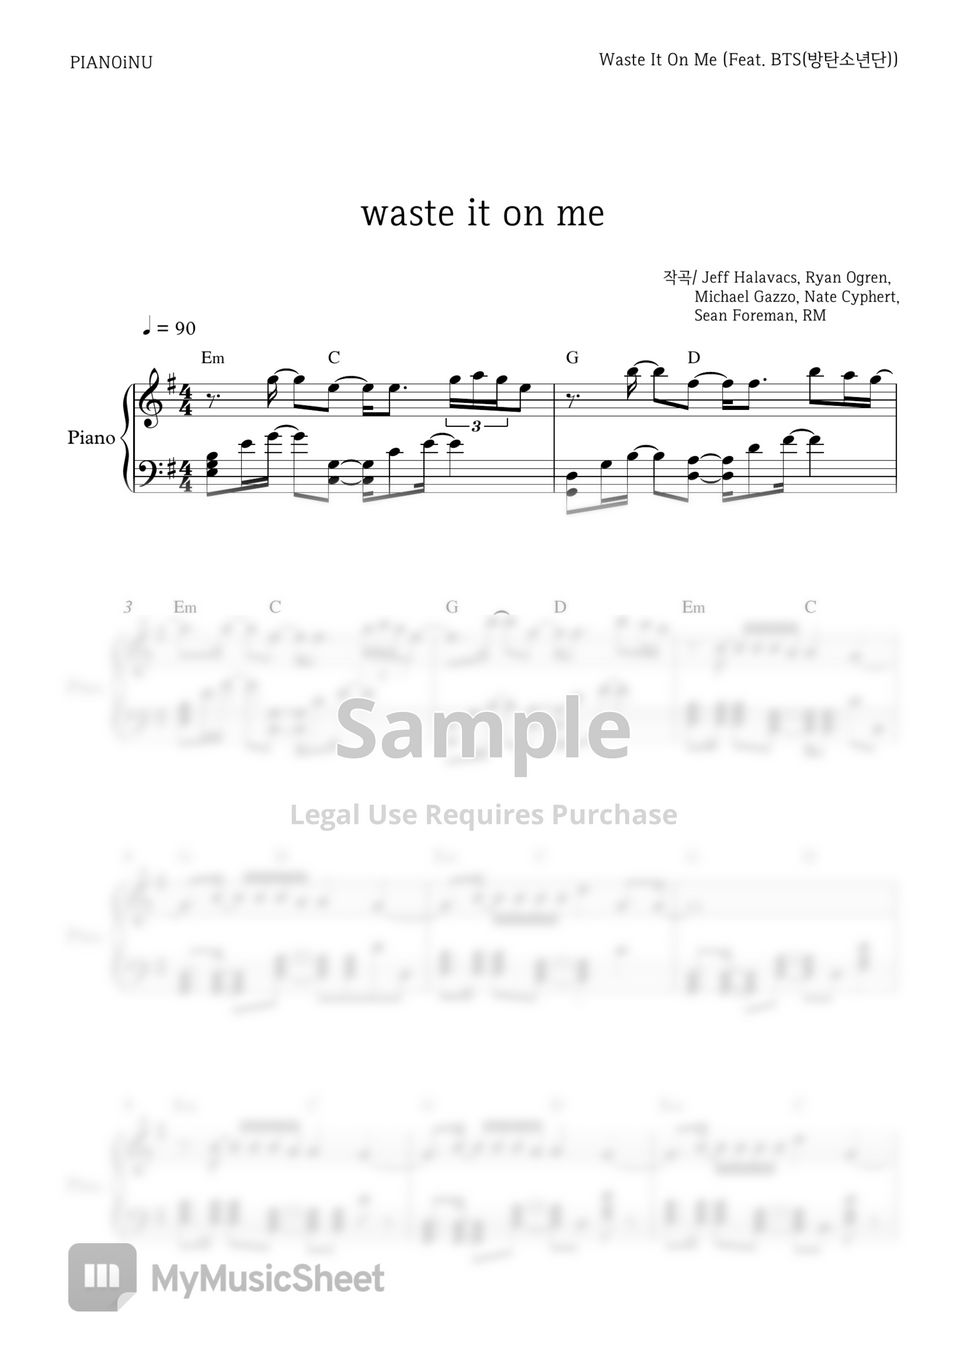 Steve Aoki - Waste It On Me feat. BTS PIANOiNU